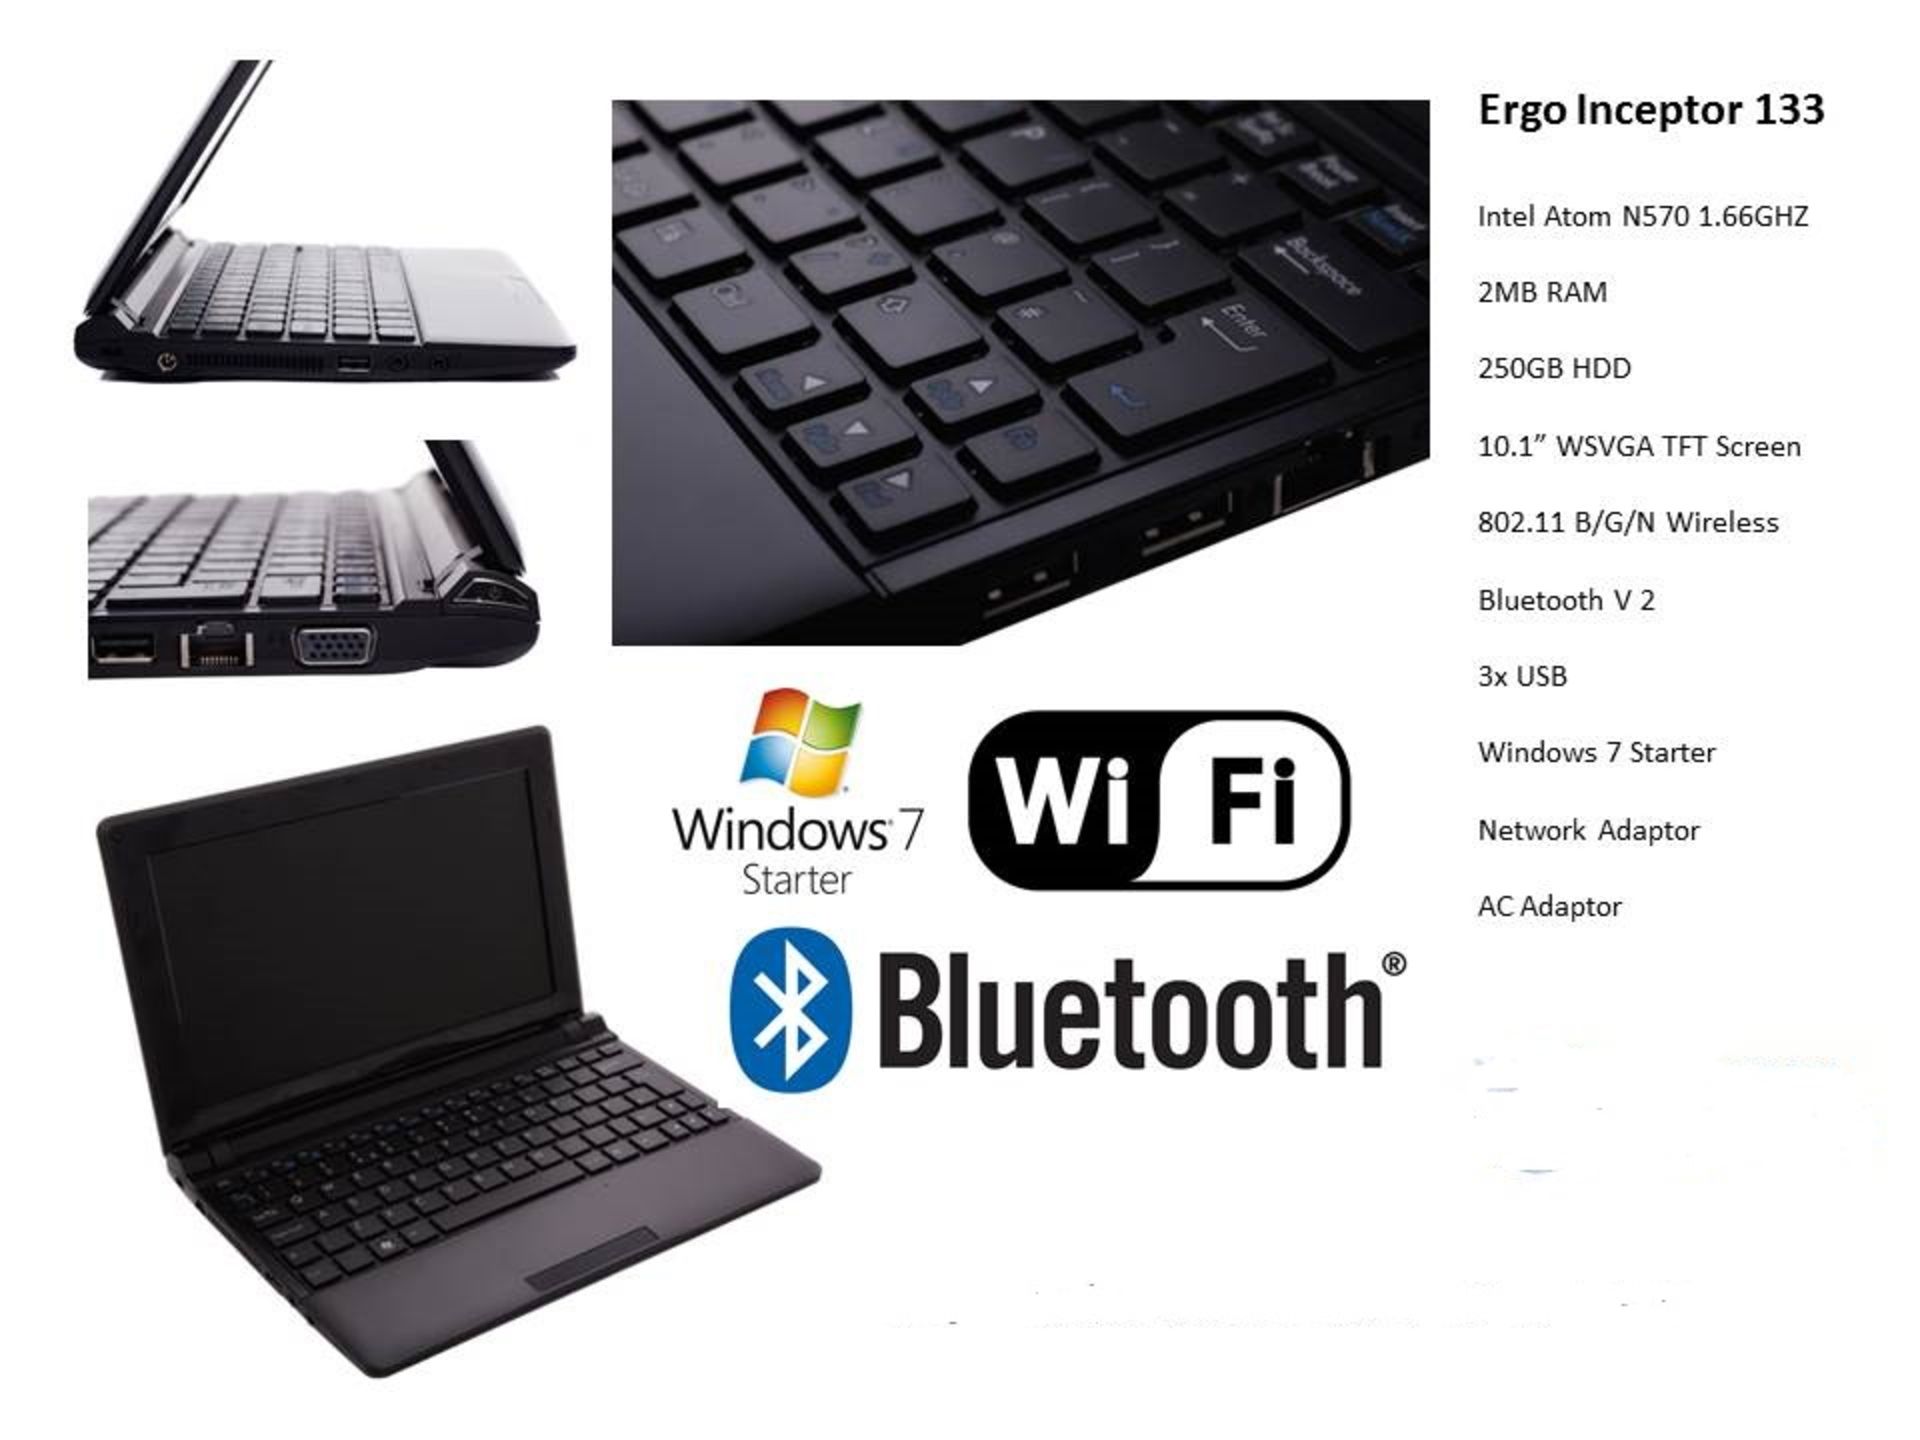 V Ergo Inceptor 133 166Ghz, 250GB HDD, 10" TFT screen, wireless, bluetooth &3 x USB